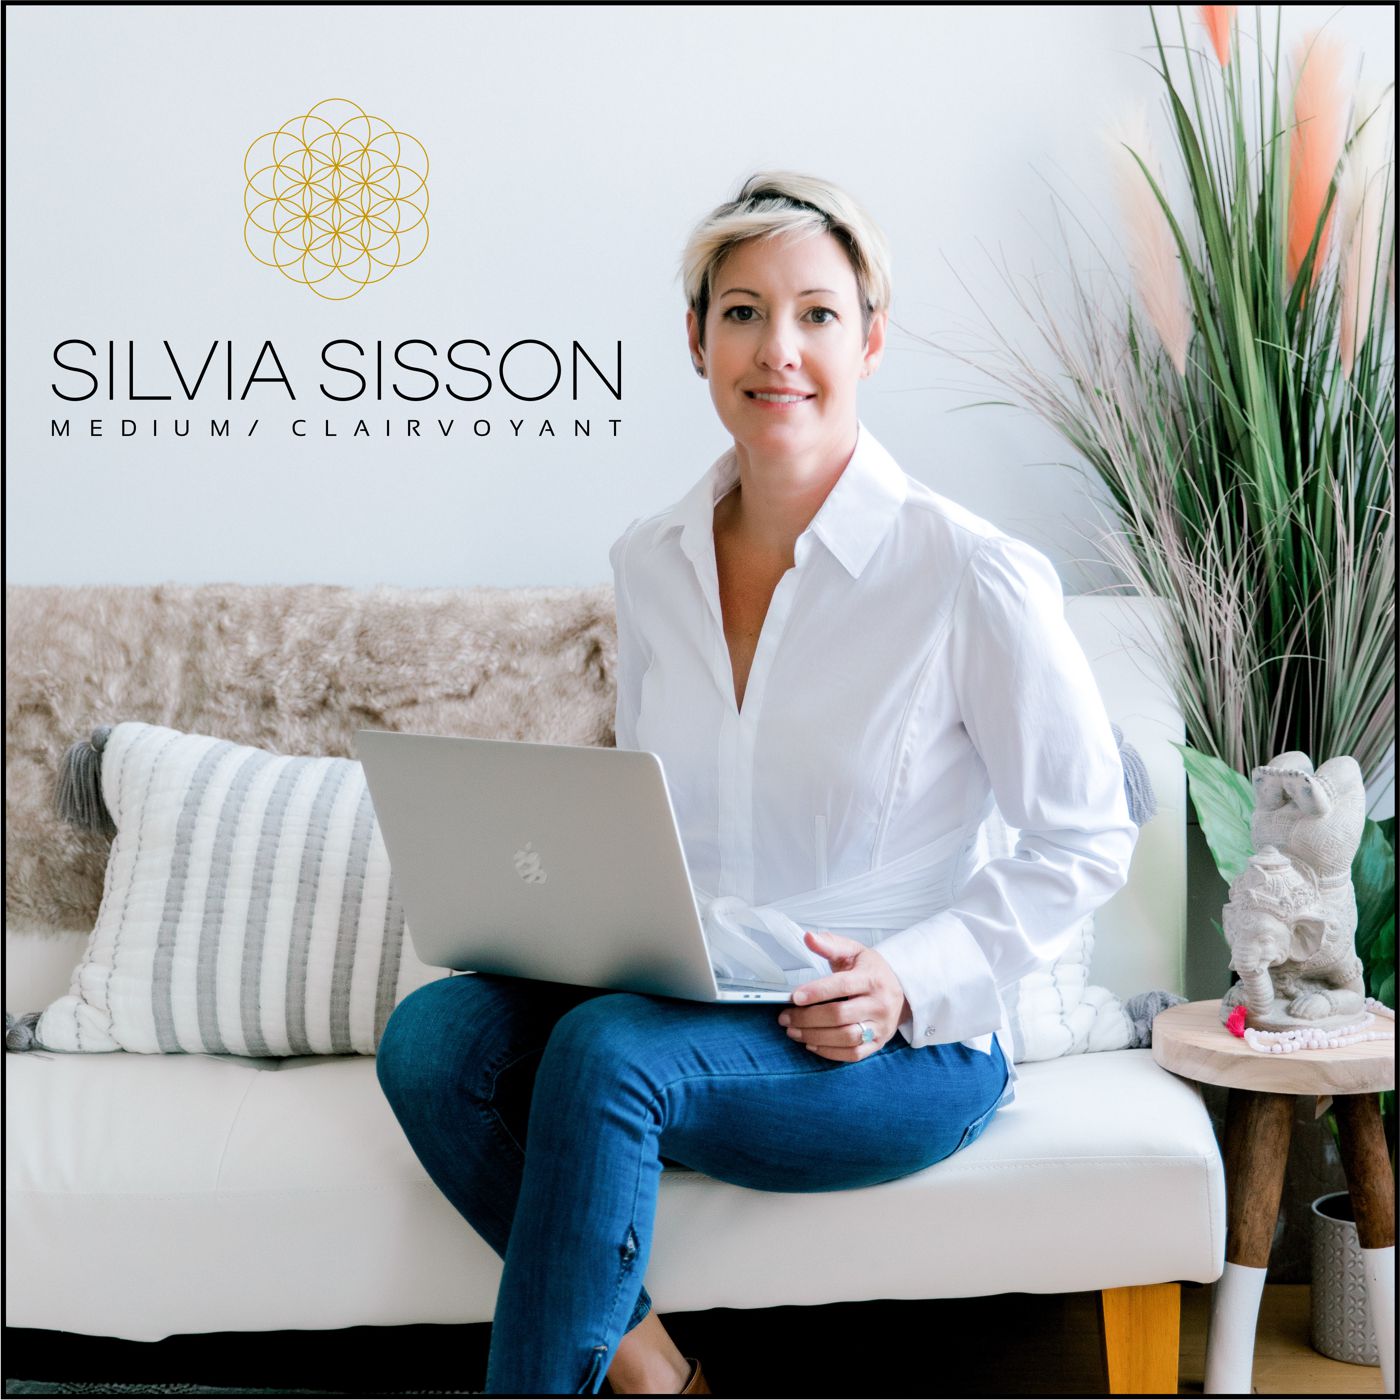 Silvia Sisson Medium/Clairvoyant Episode 1